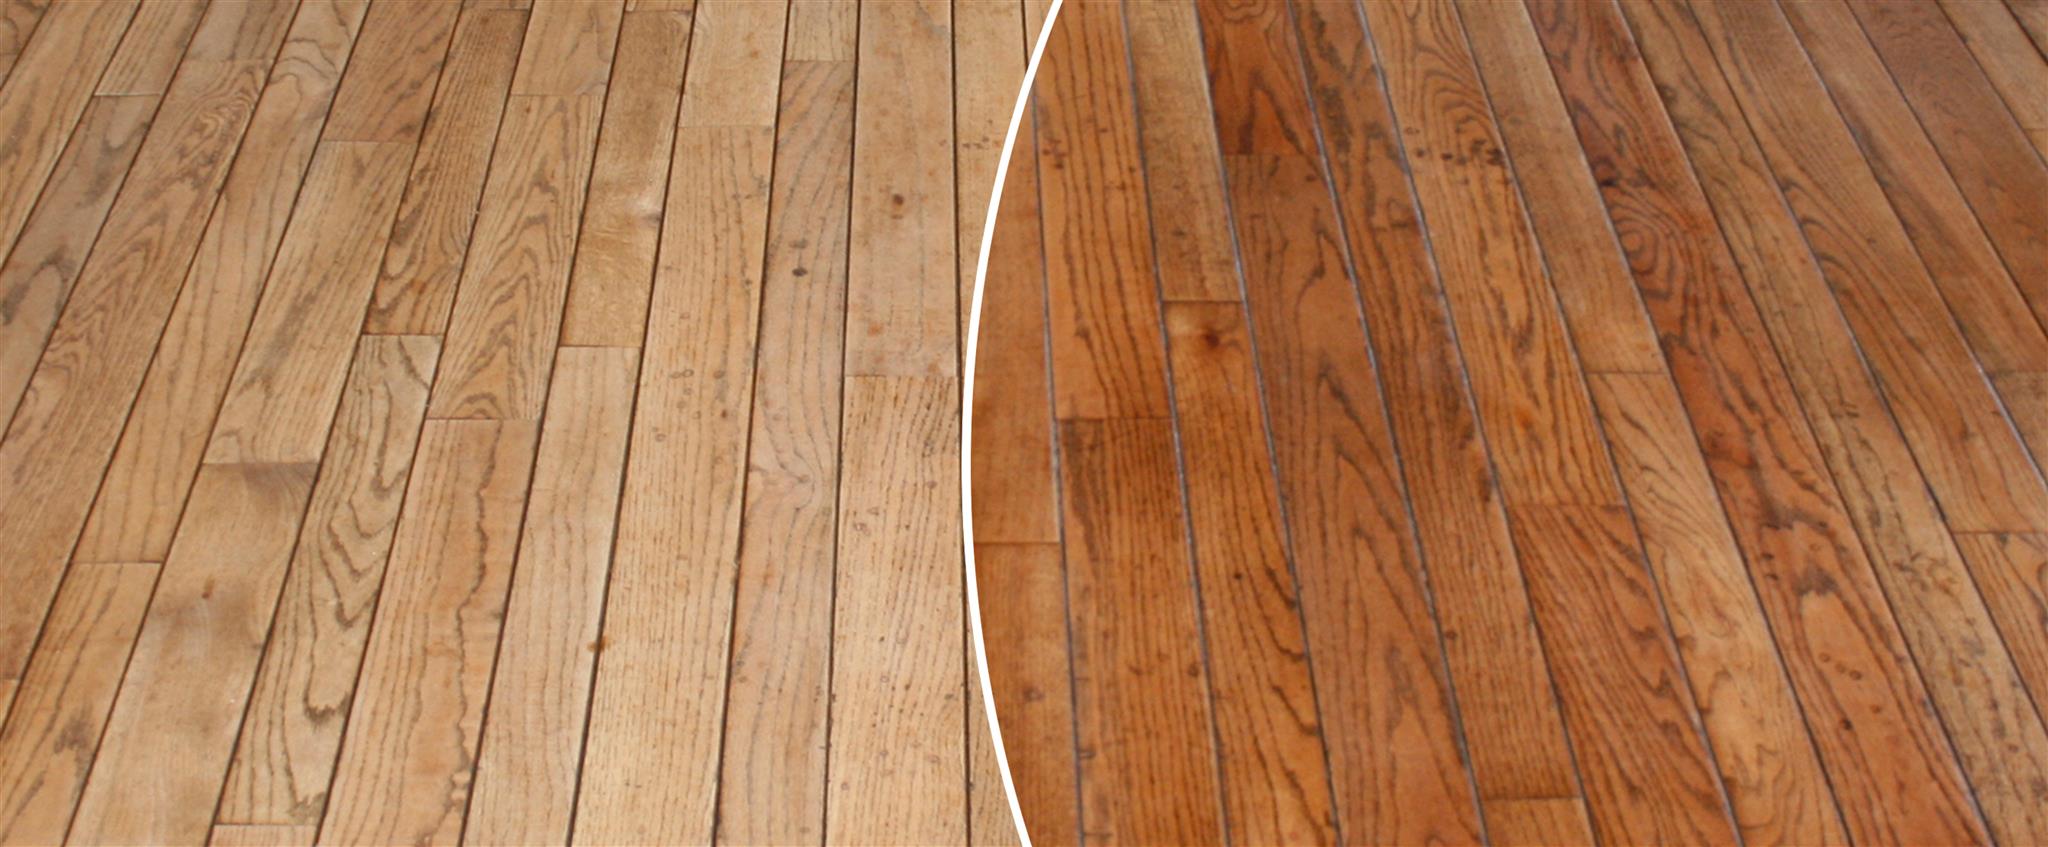 Wood Floor Refinishing Services N Hance, Hardwood Floor Refinishing Mn